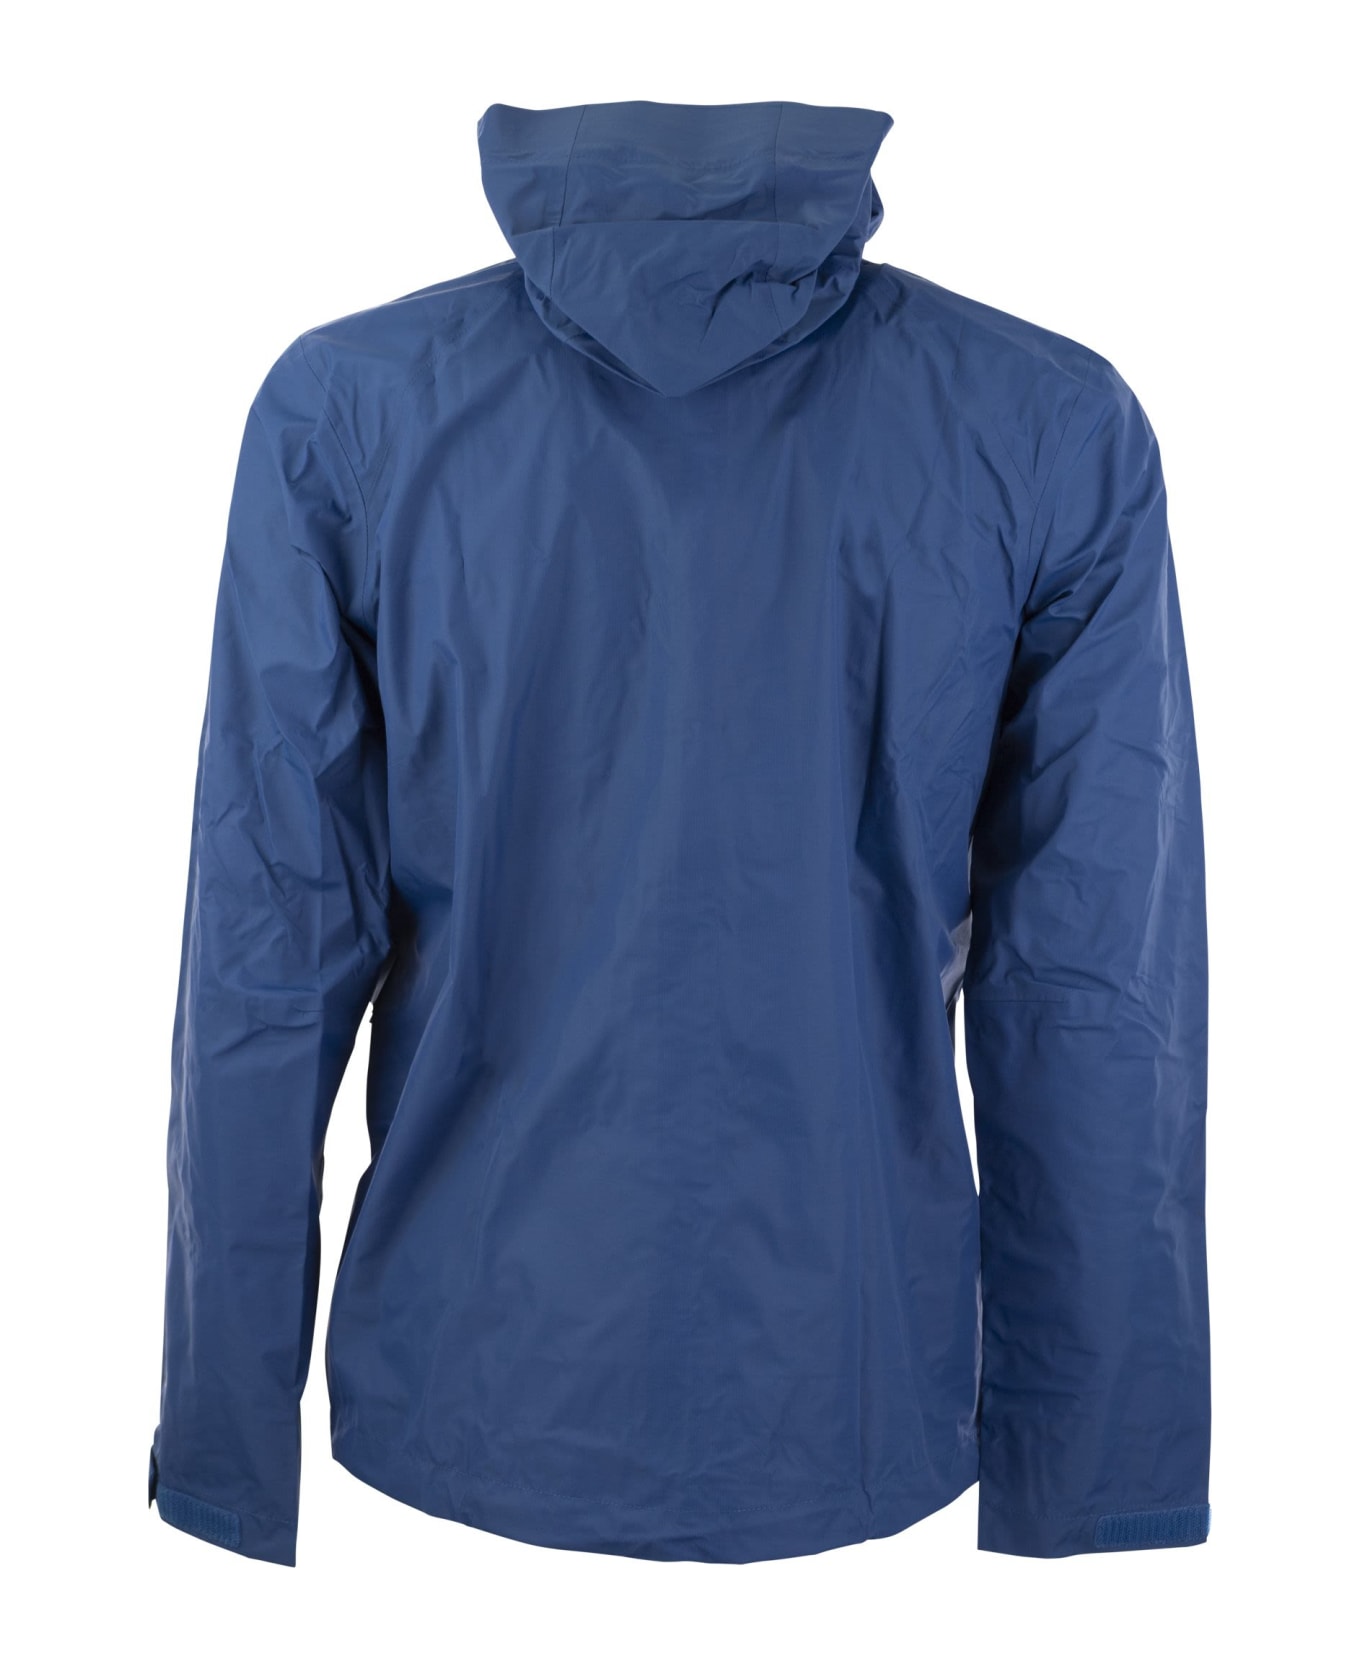 Patagonia Nylon Rainproof Jacket - Blue